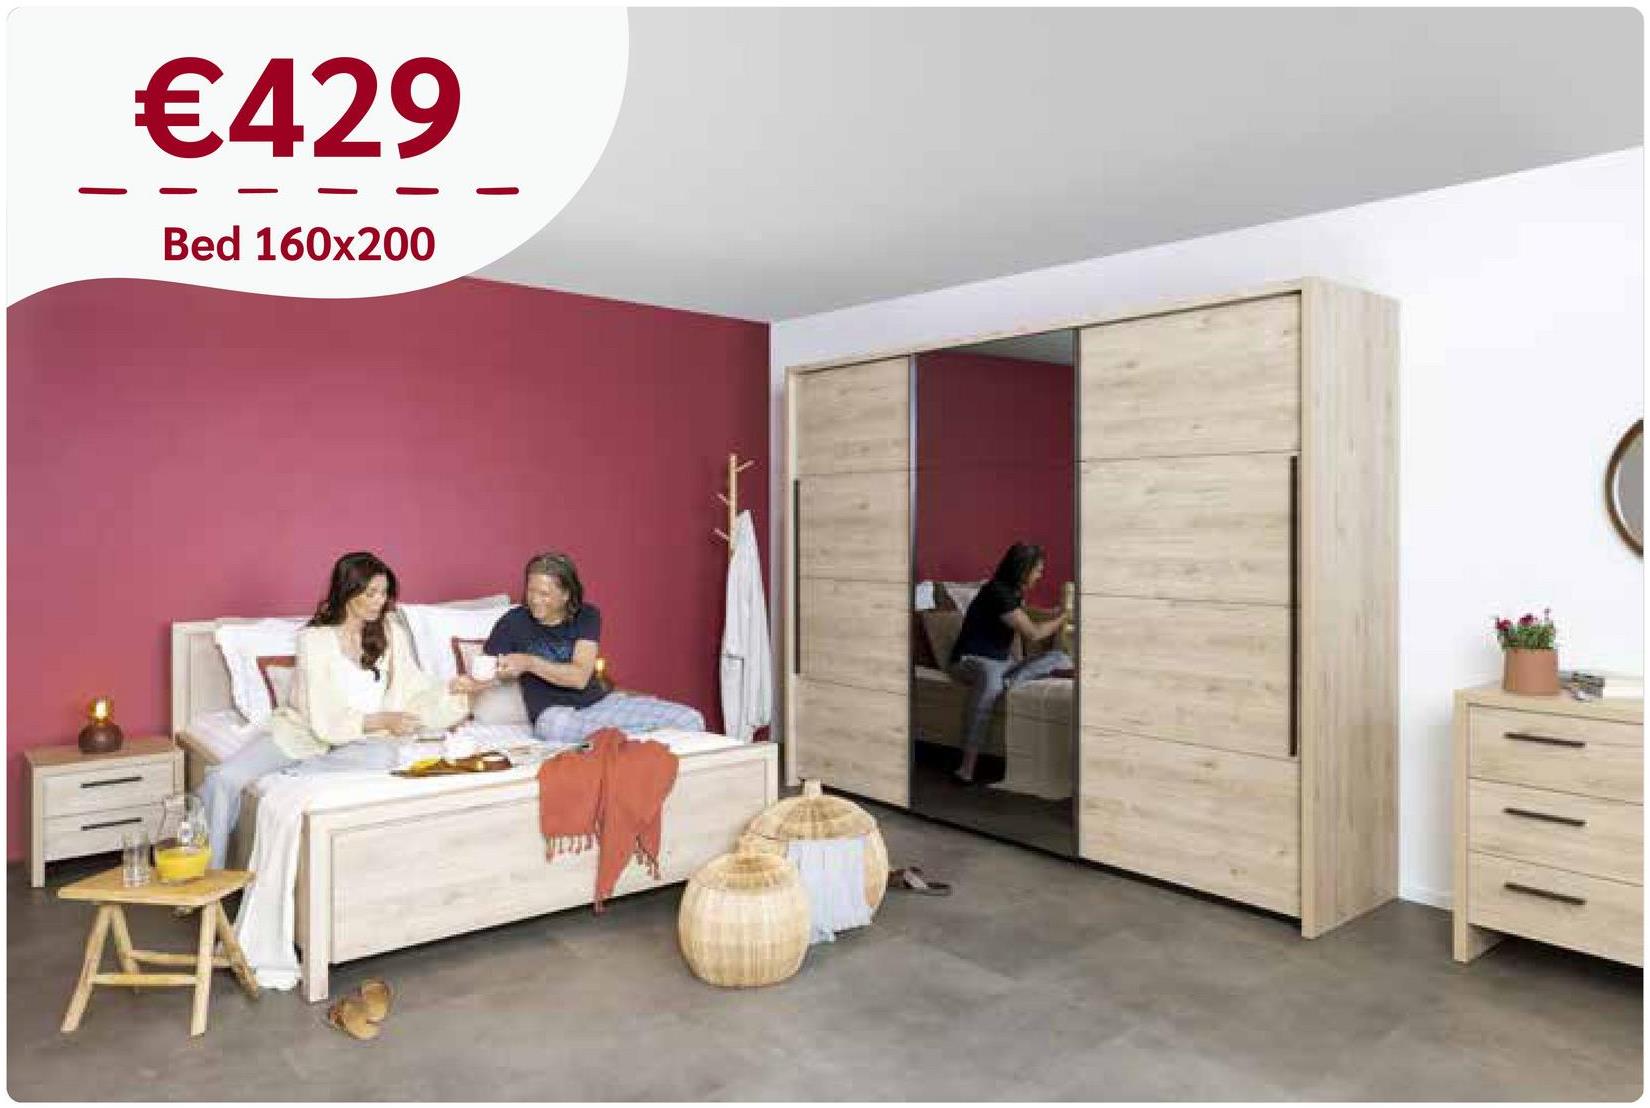 €429
Bed 160x200